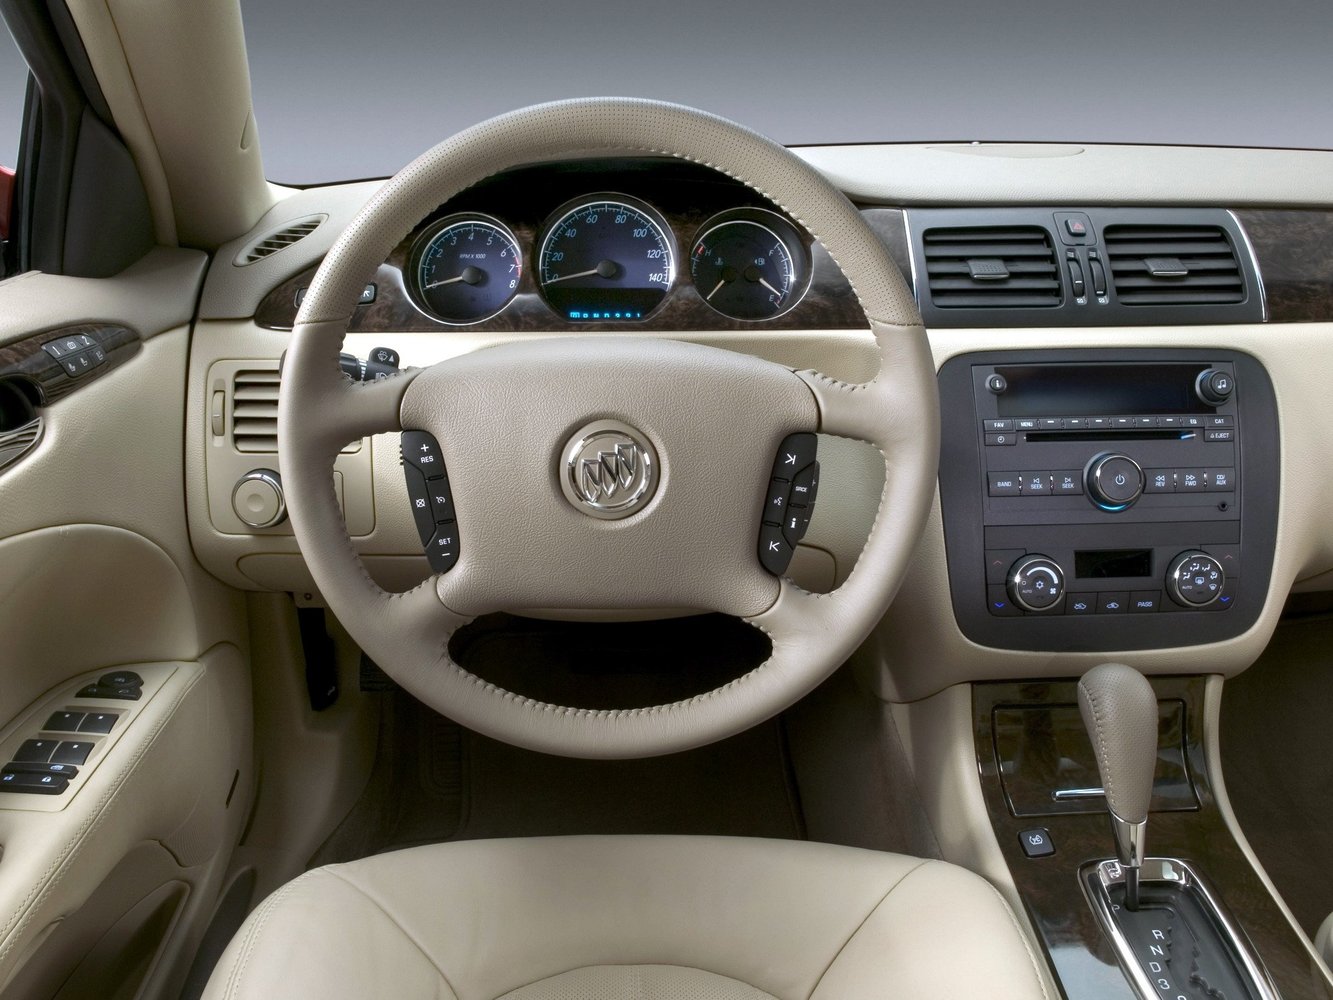 седан Buick Lucerne 2005 - 2008г выпуска модификация 3.8 AT (197 л.с.)